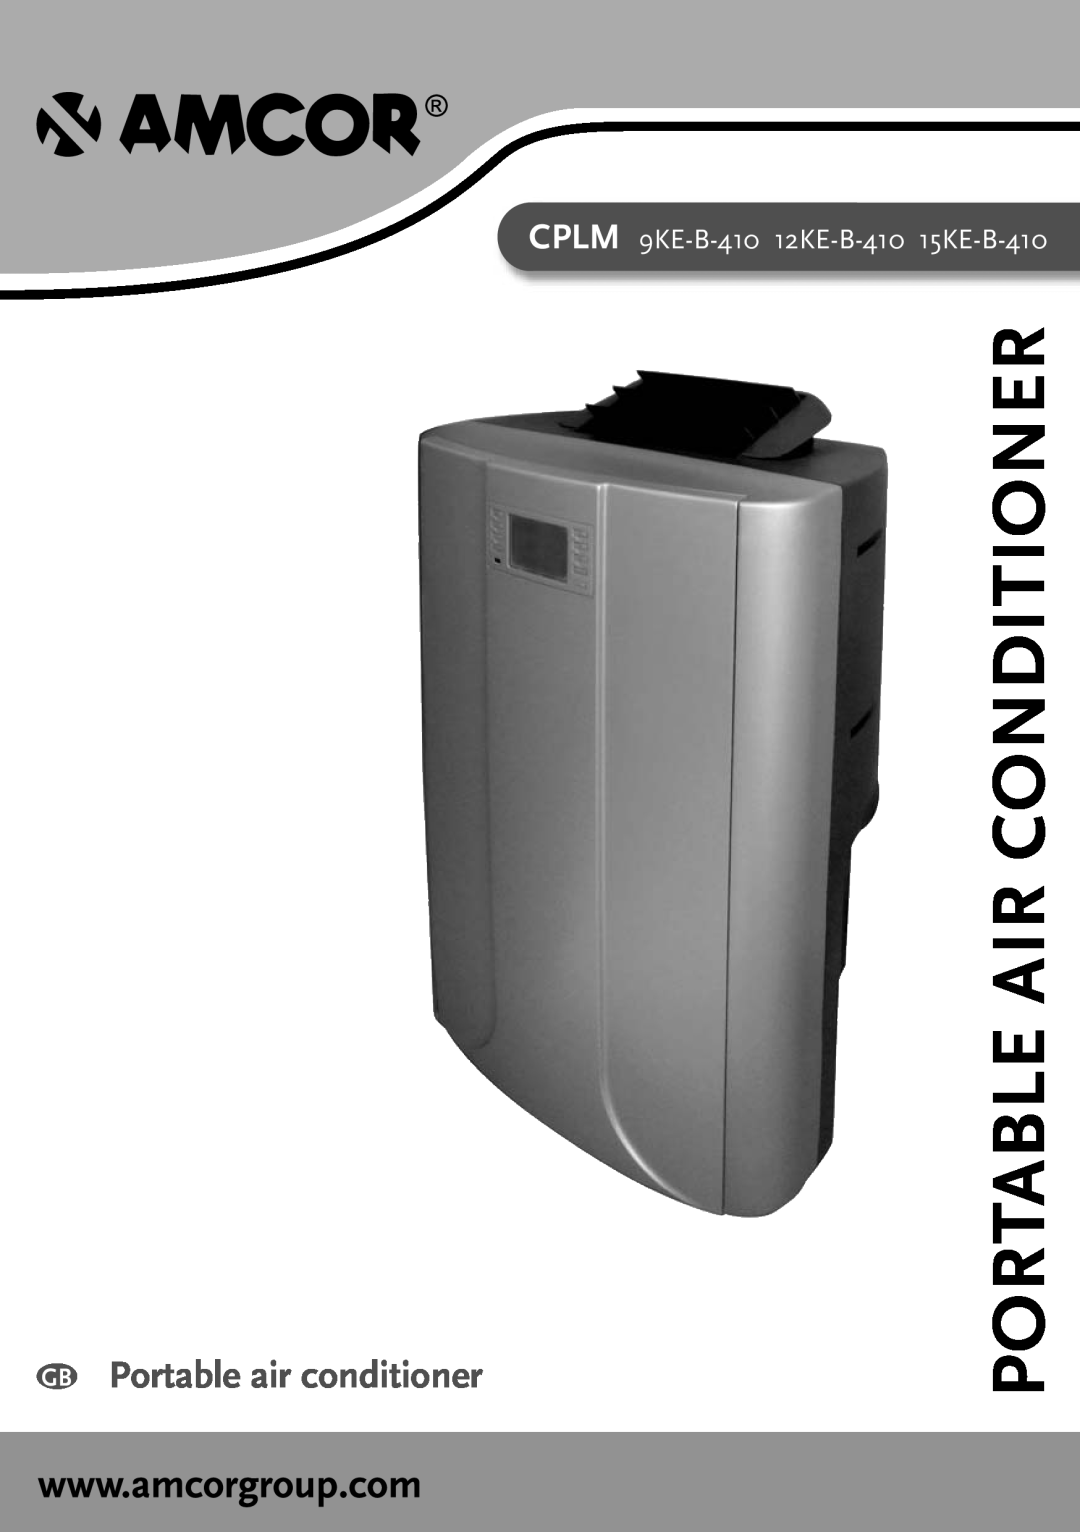 Amcor manual Portable Air Conditioner, GB Portable air conditioner, CPLM 9KE-B-410 12KE-B-410 15KE-B-410 